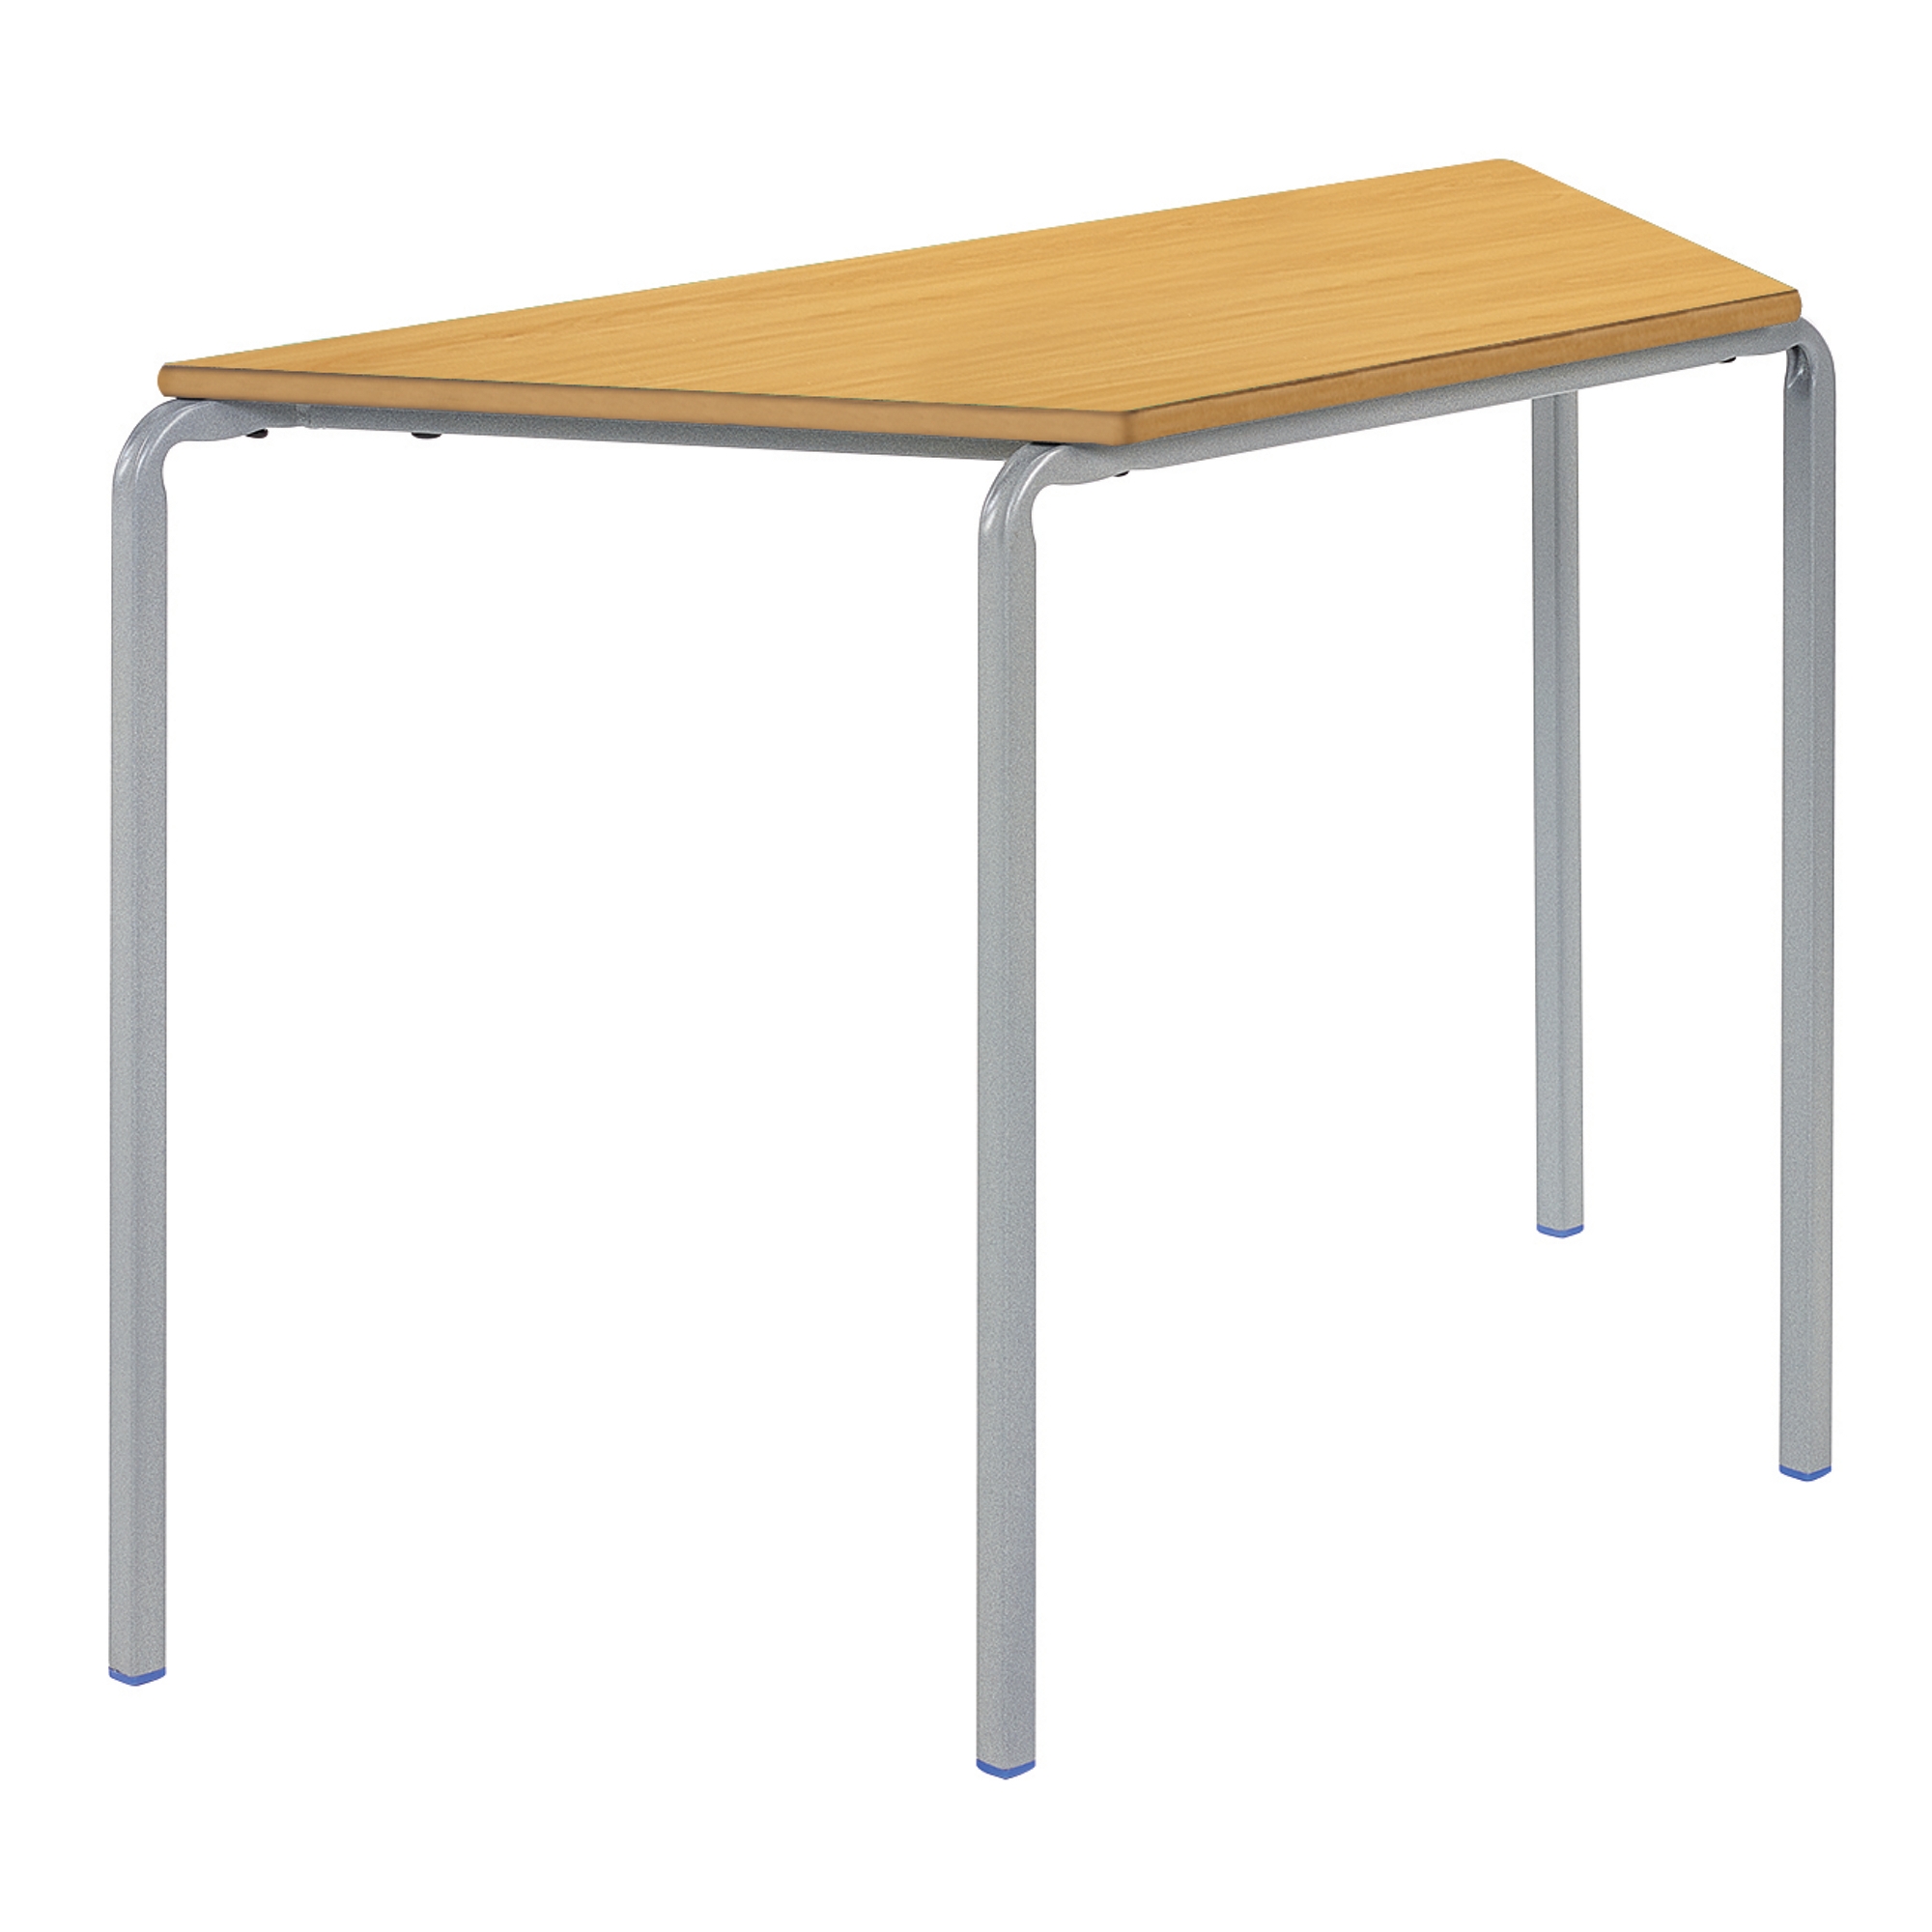 Classmates Trapezoidal Crushed Bent Classroom Table - 1100 x 550 x 760mm - Beech